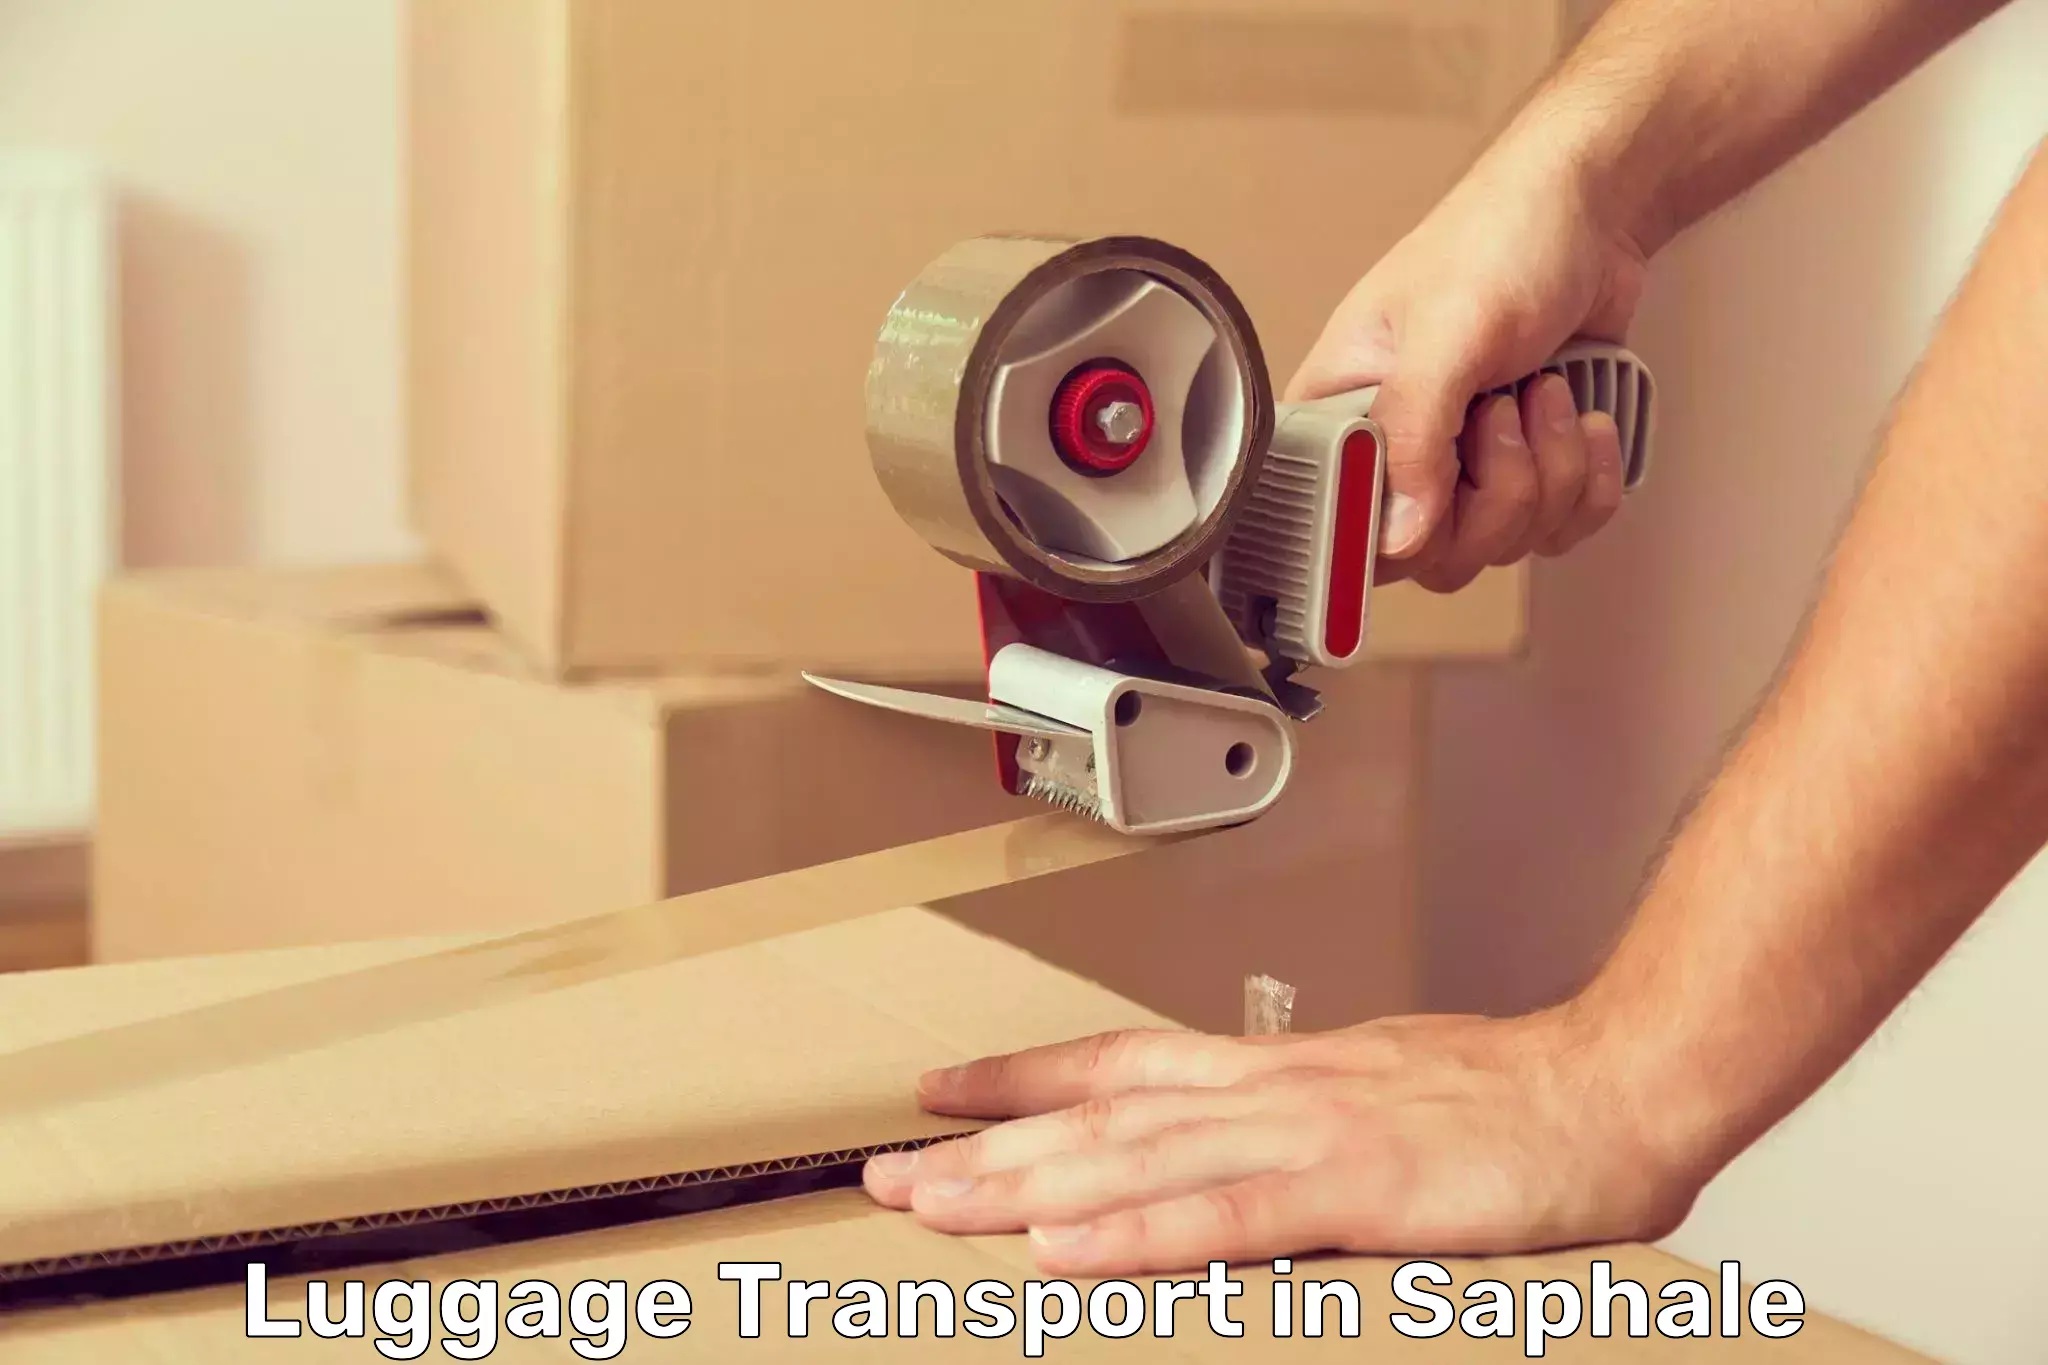 Luggage transit service in Saphale